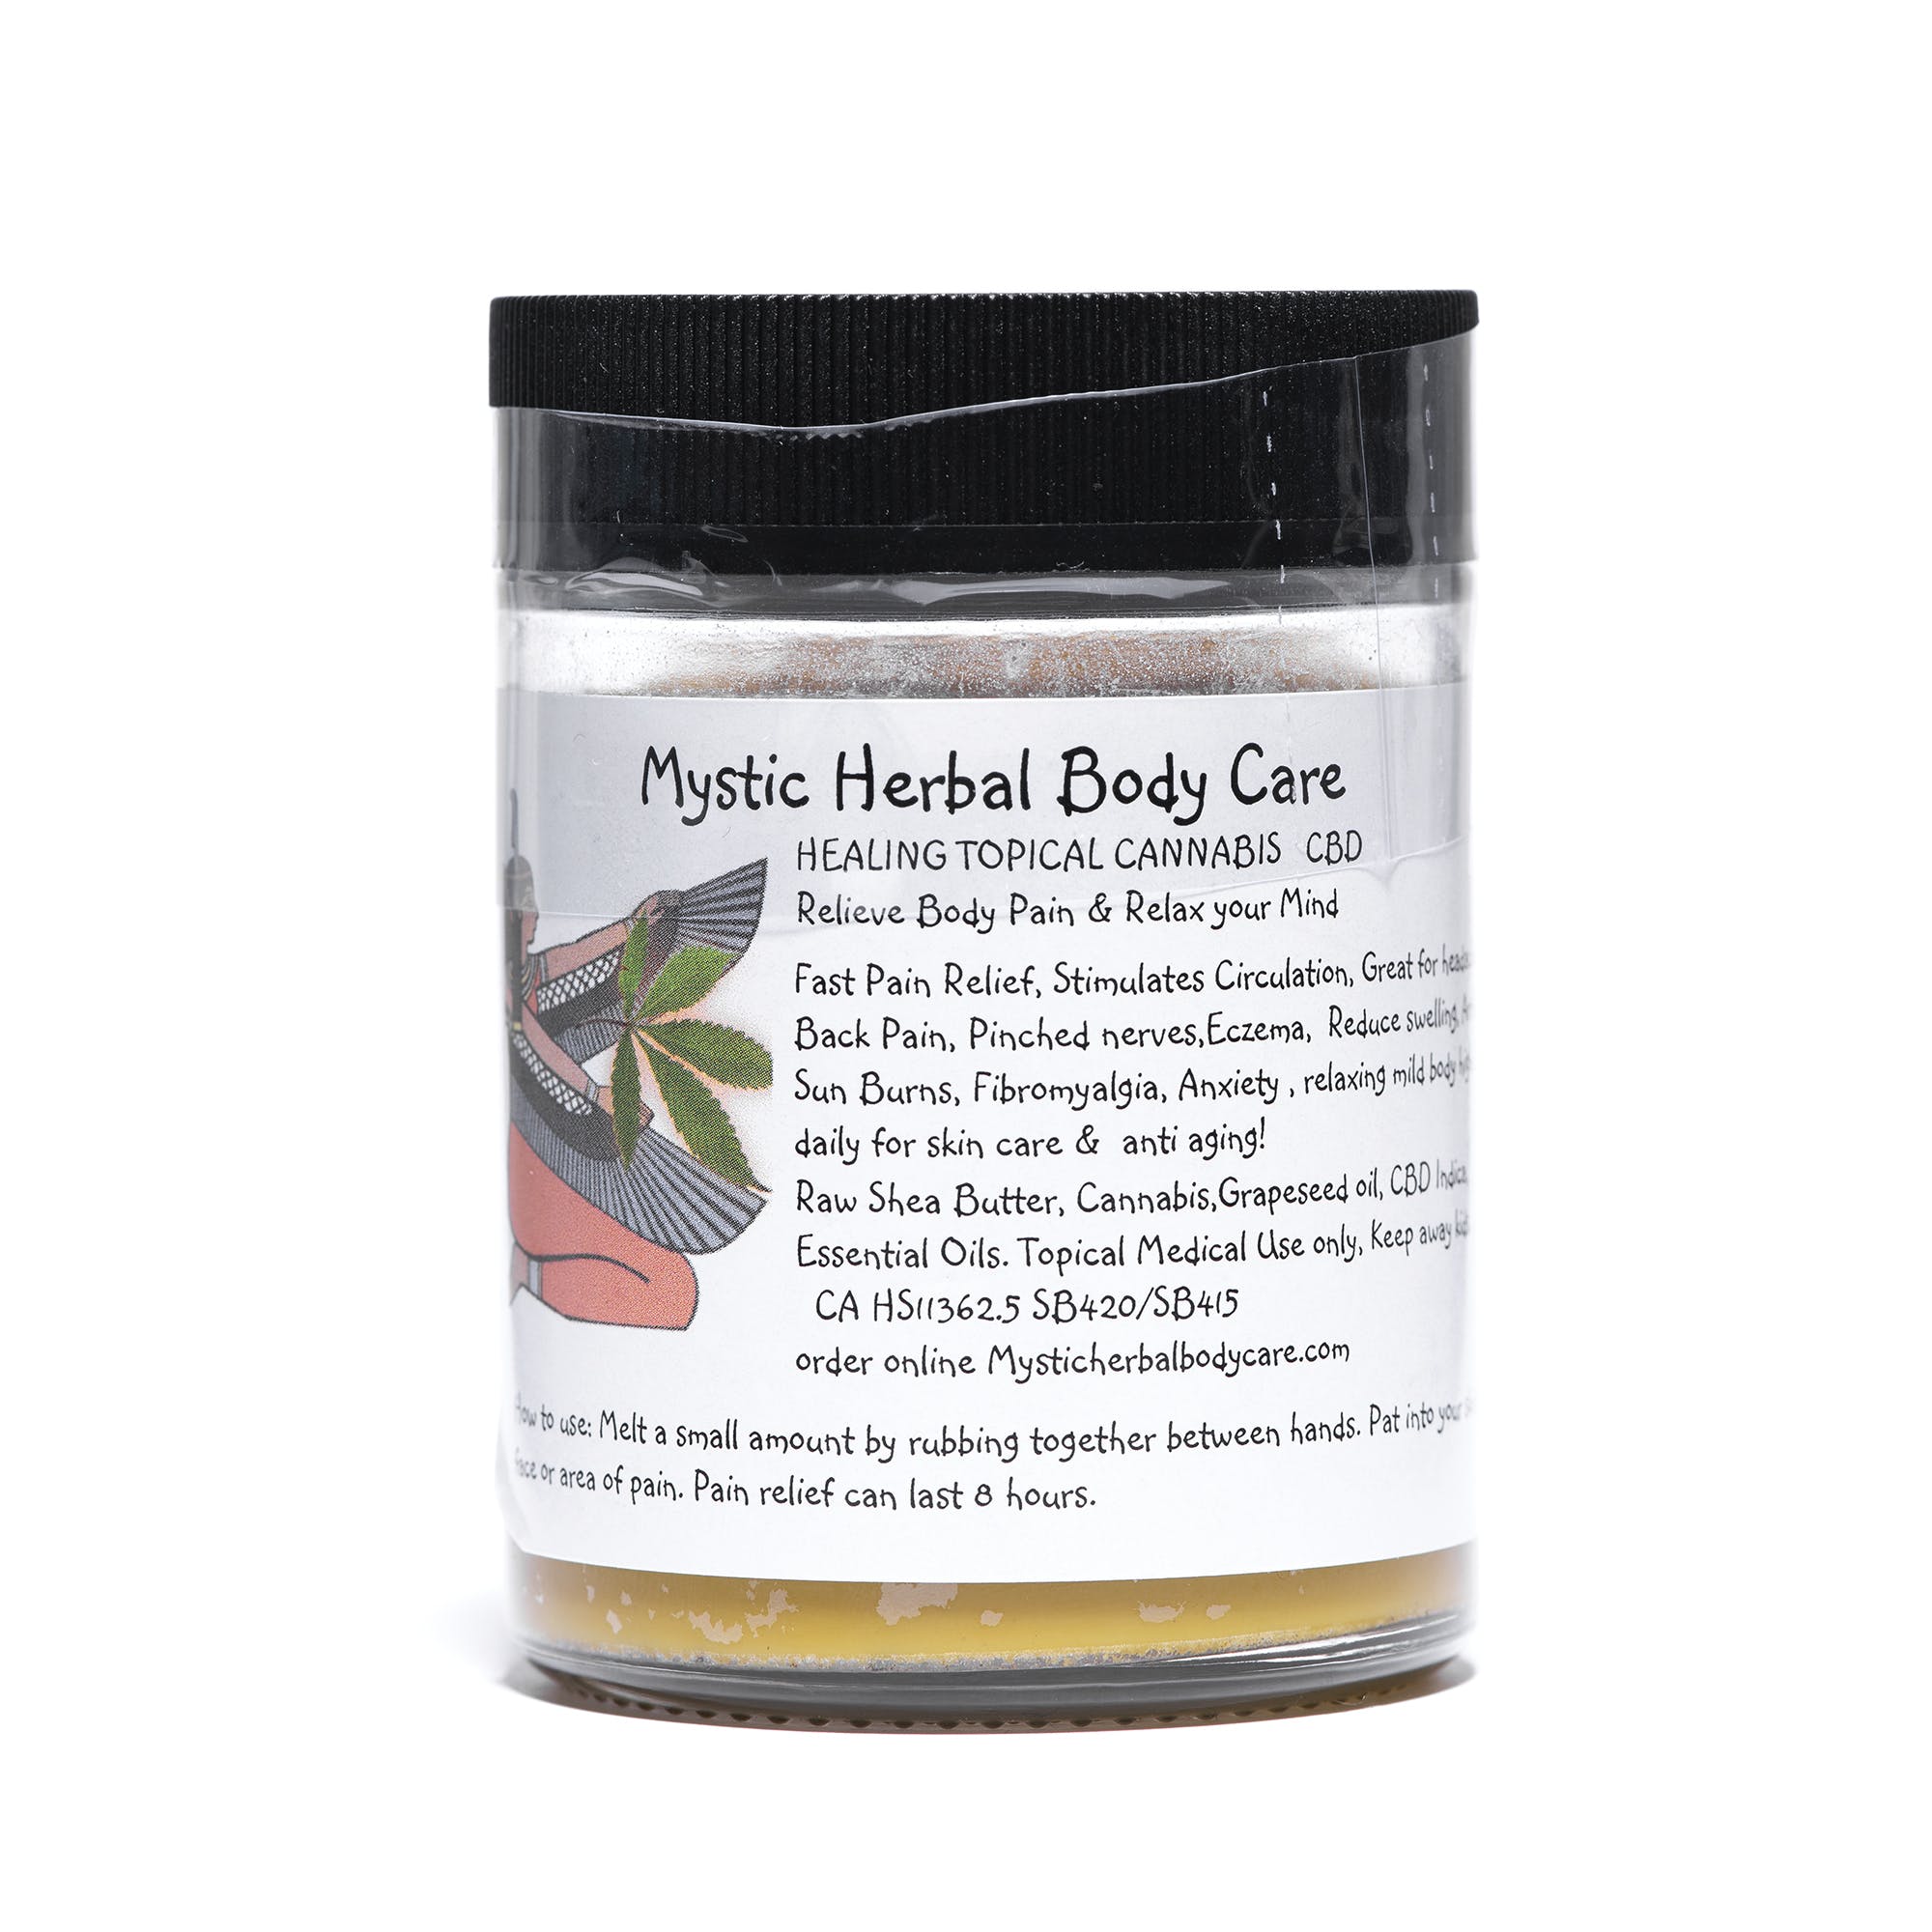 Mystic Herbal Body Cure - 4oz Body Butter